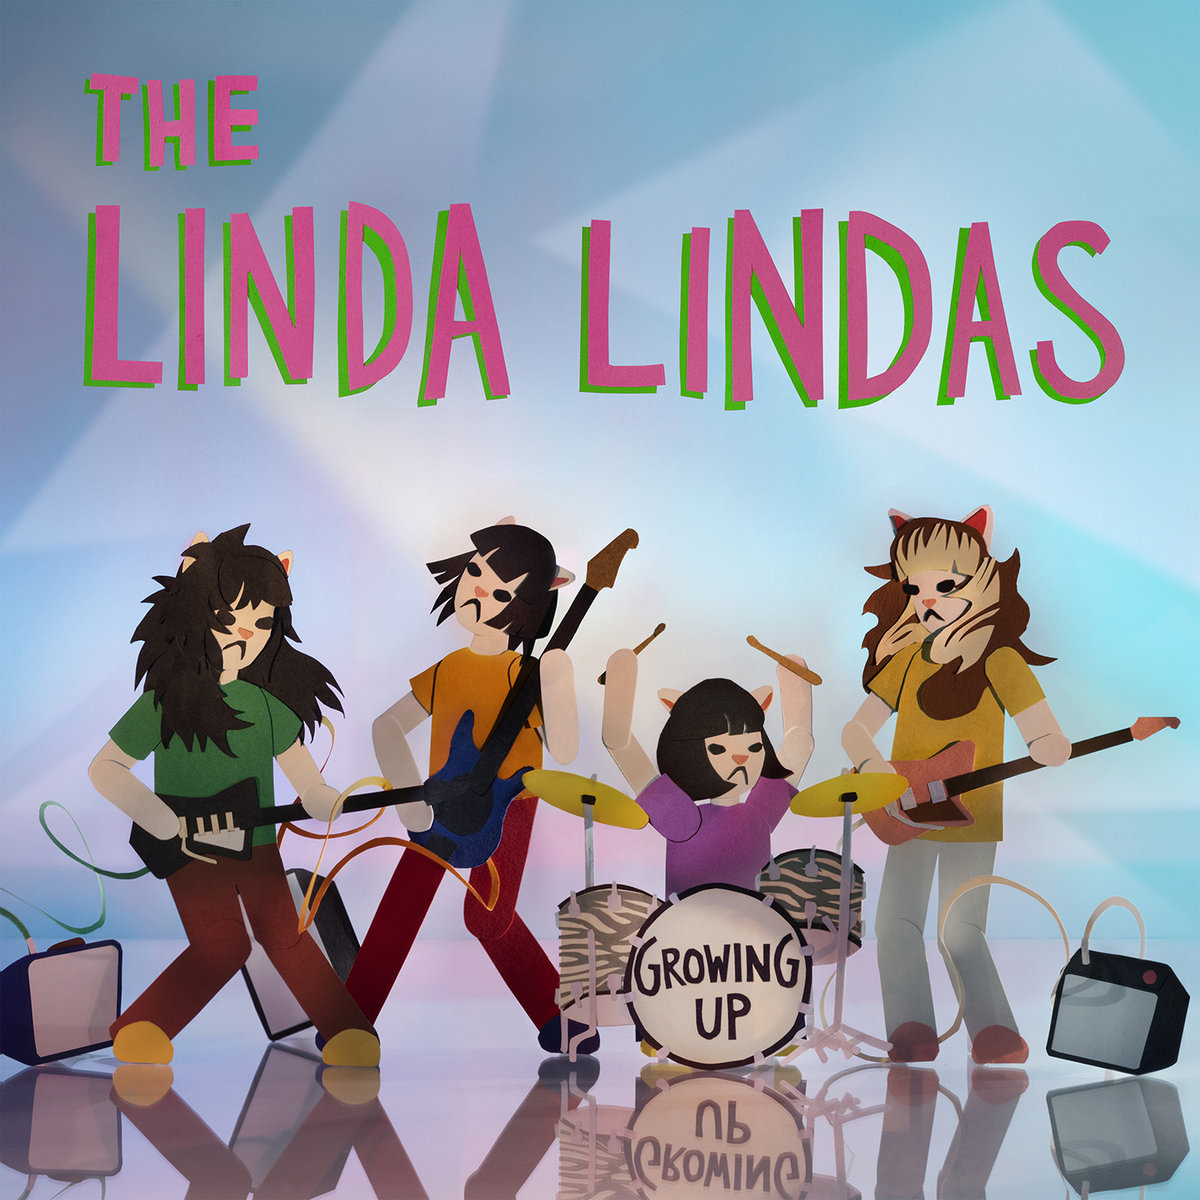 Trenutno pregledavate Teen punk zvijezde The Linda Lindas objavile prvijenac “Growing Up”